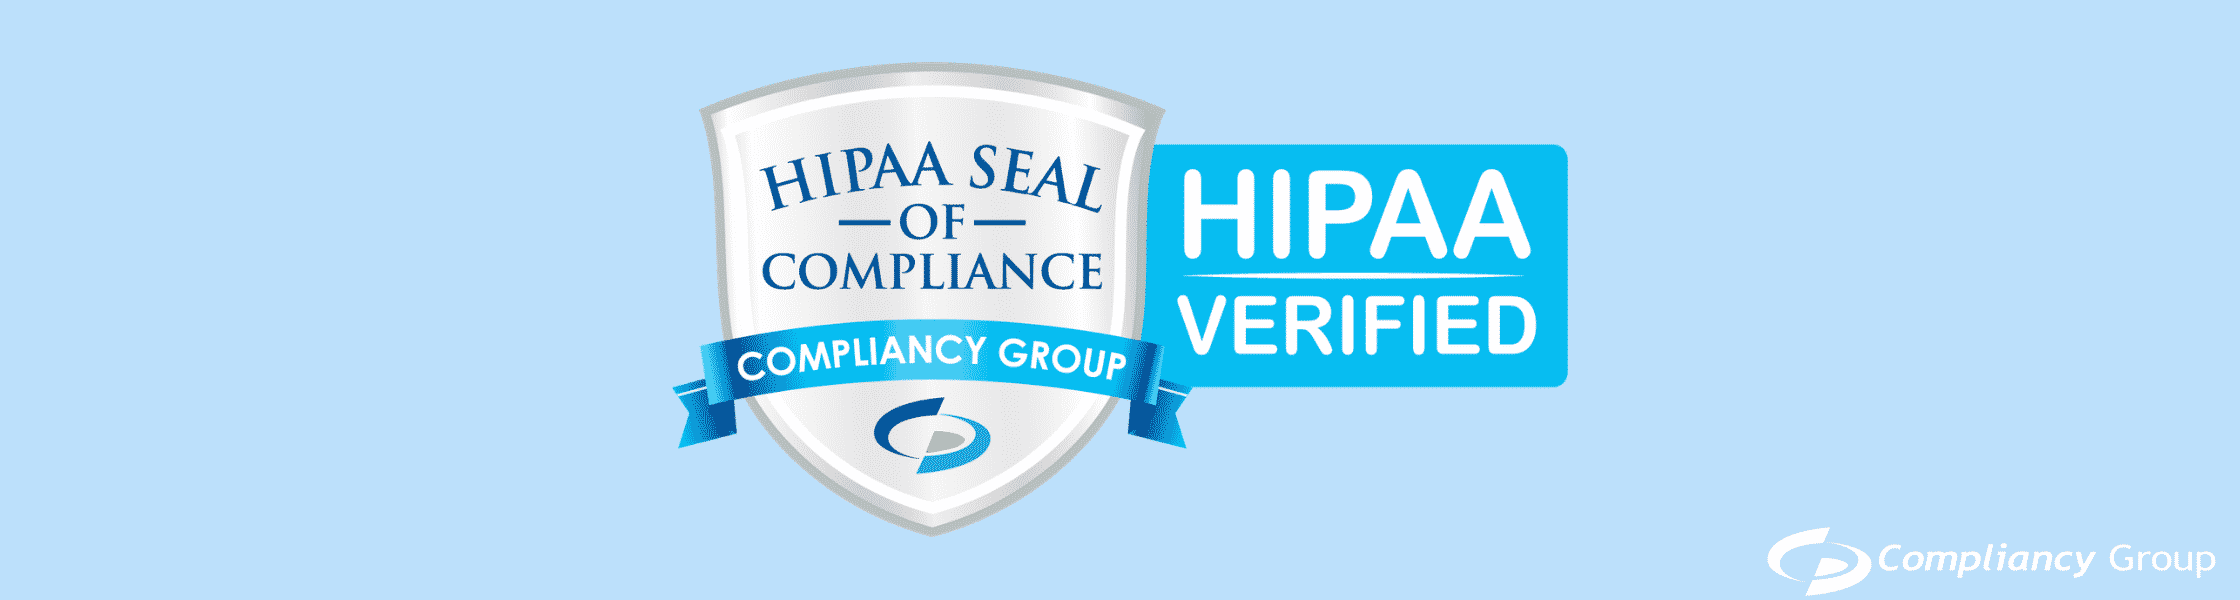 HIPAA Accreditation